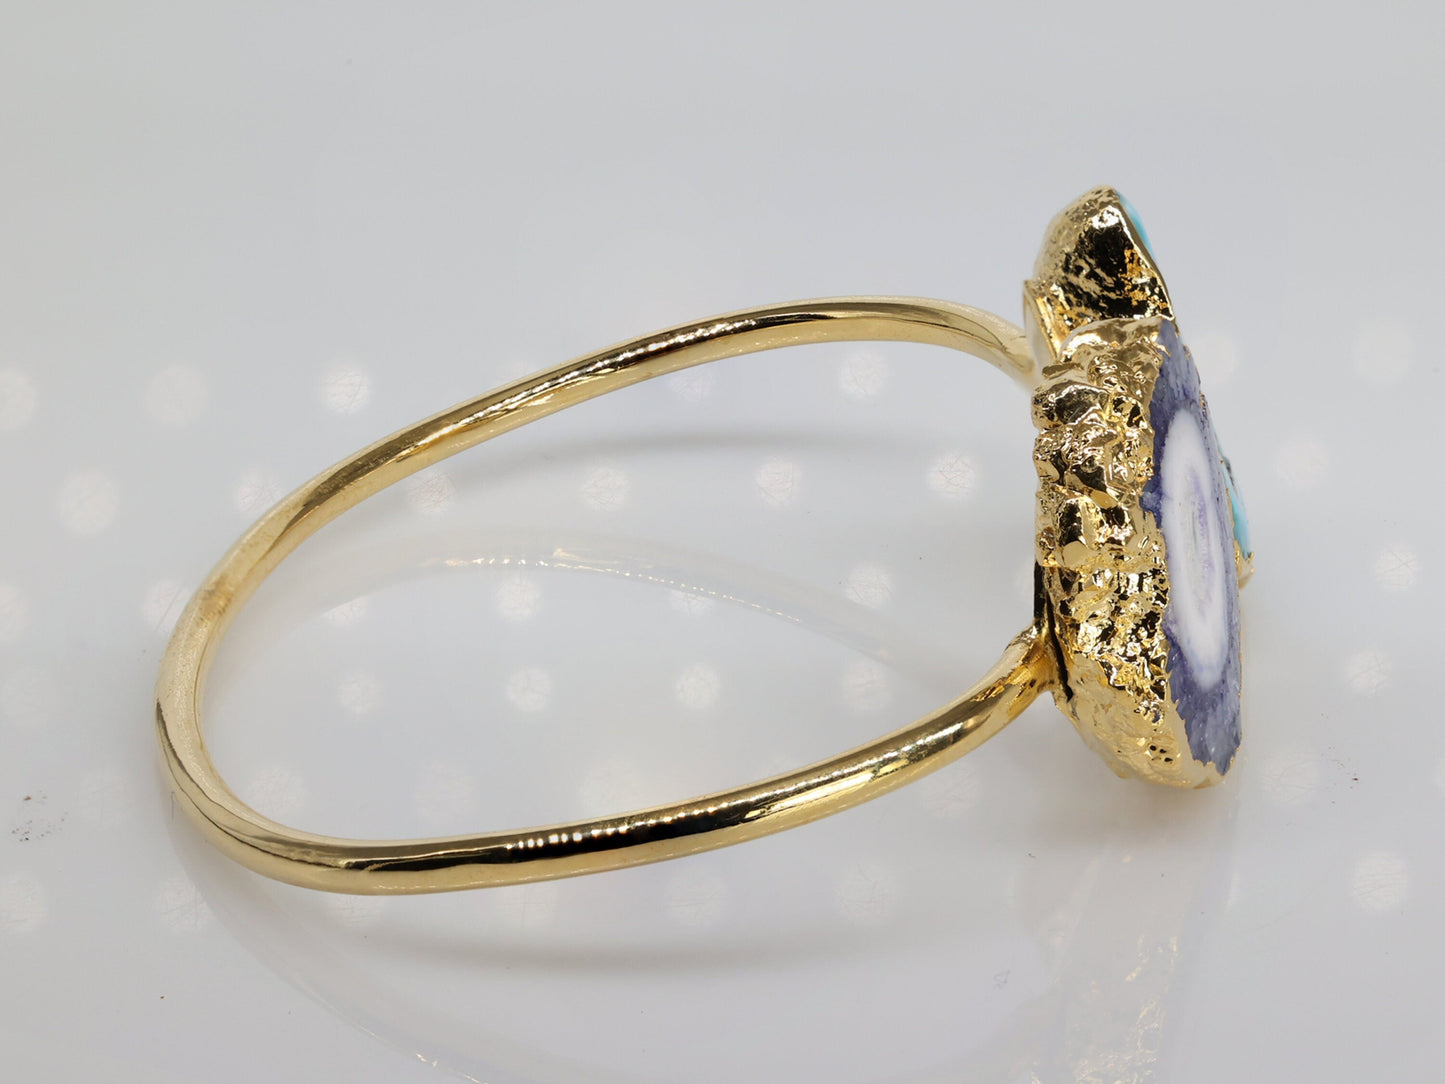 Bracelet Geode and Solar Quartz Gold Edged over Brass - Meena Design